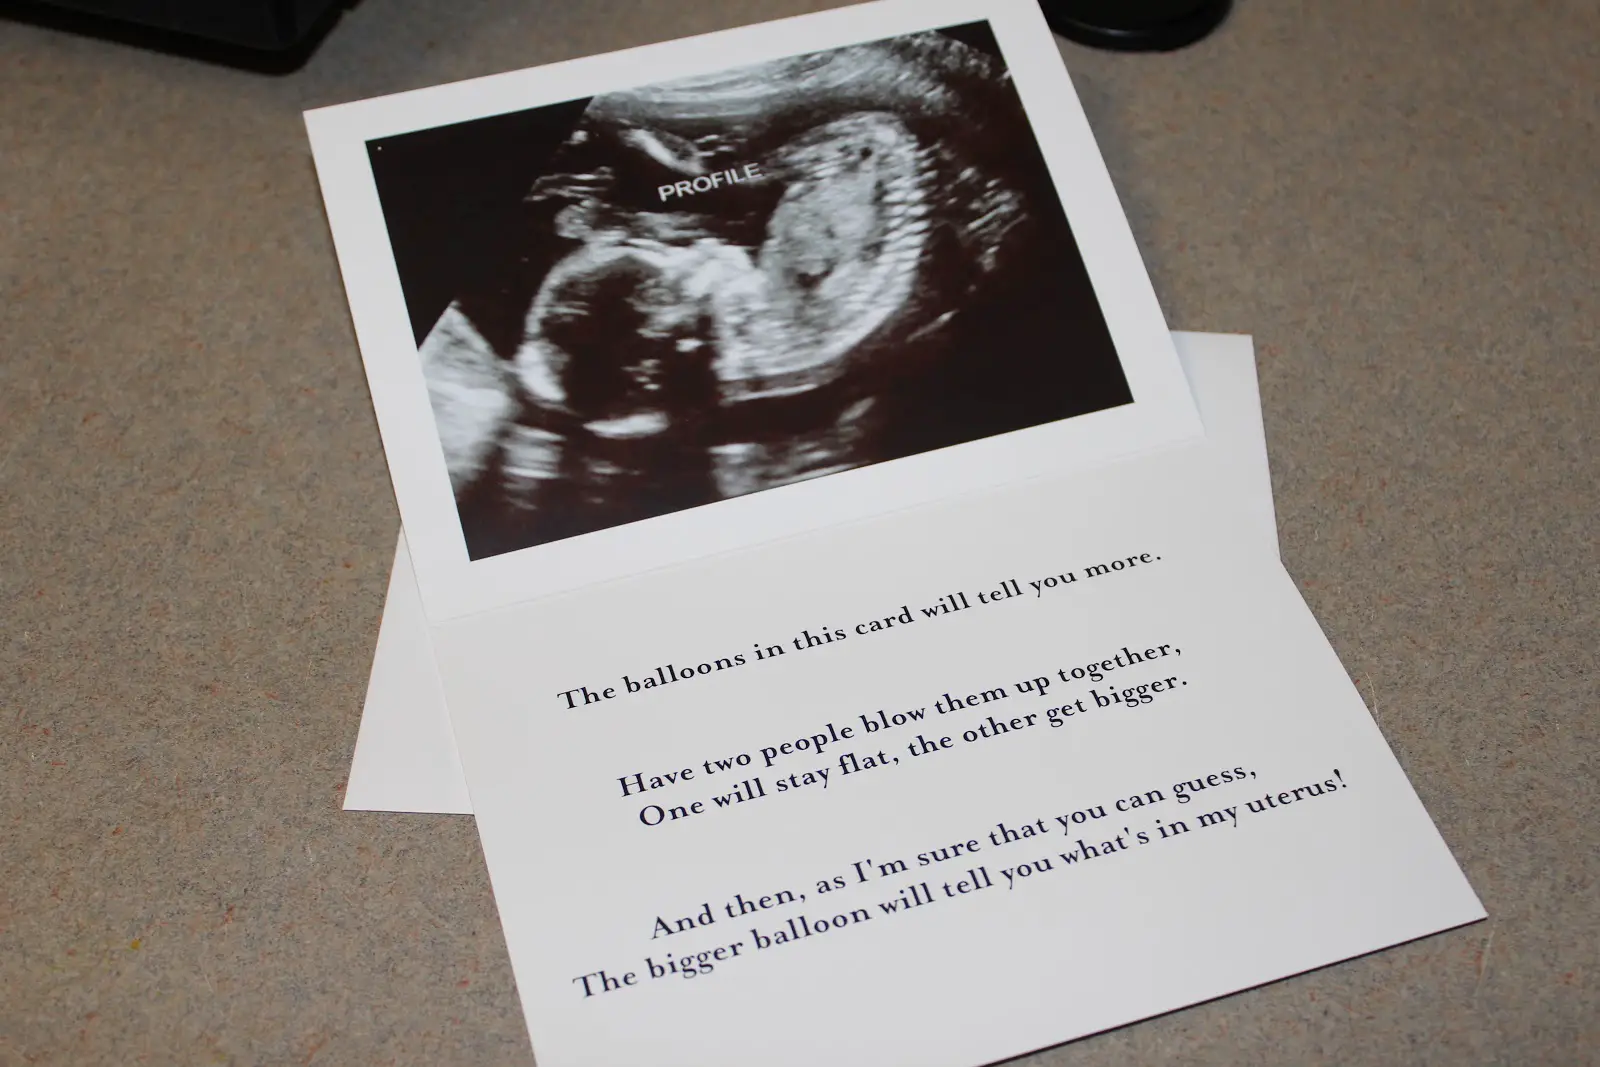 pregnancy announcement poems for grandparents